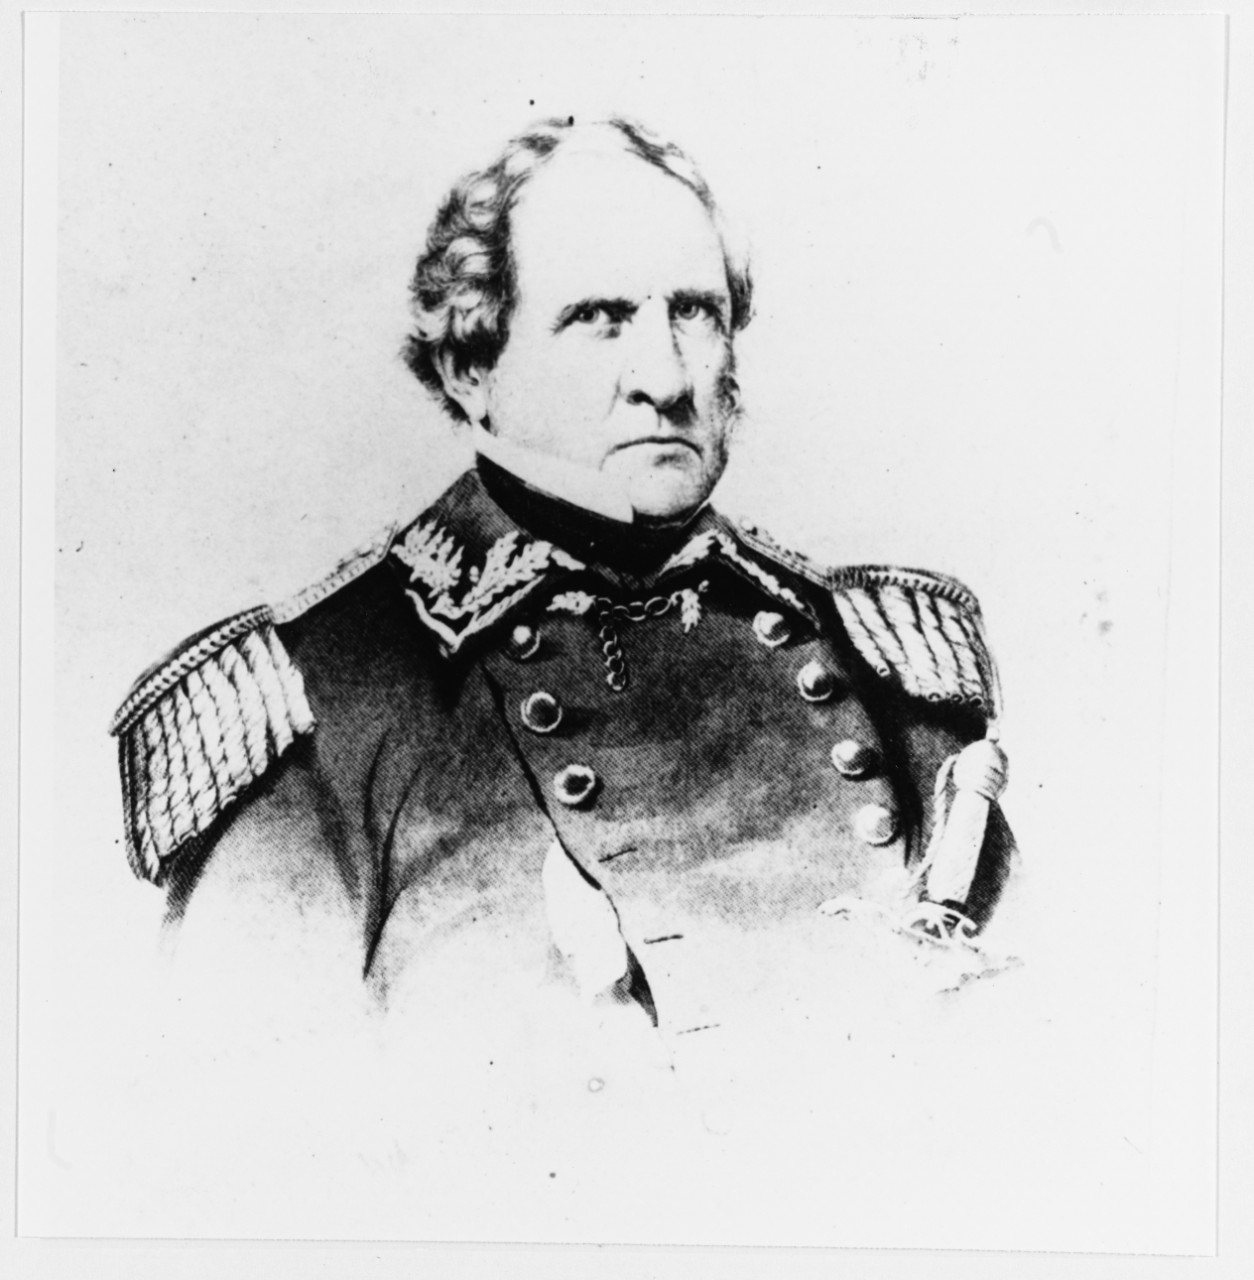 General-in-Chief, Winfield Scott, U.S. Army